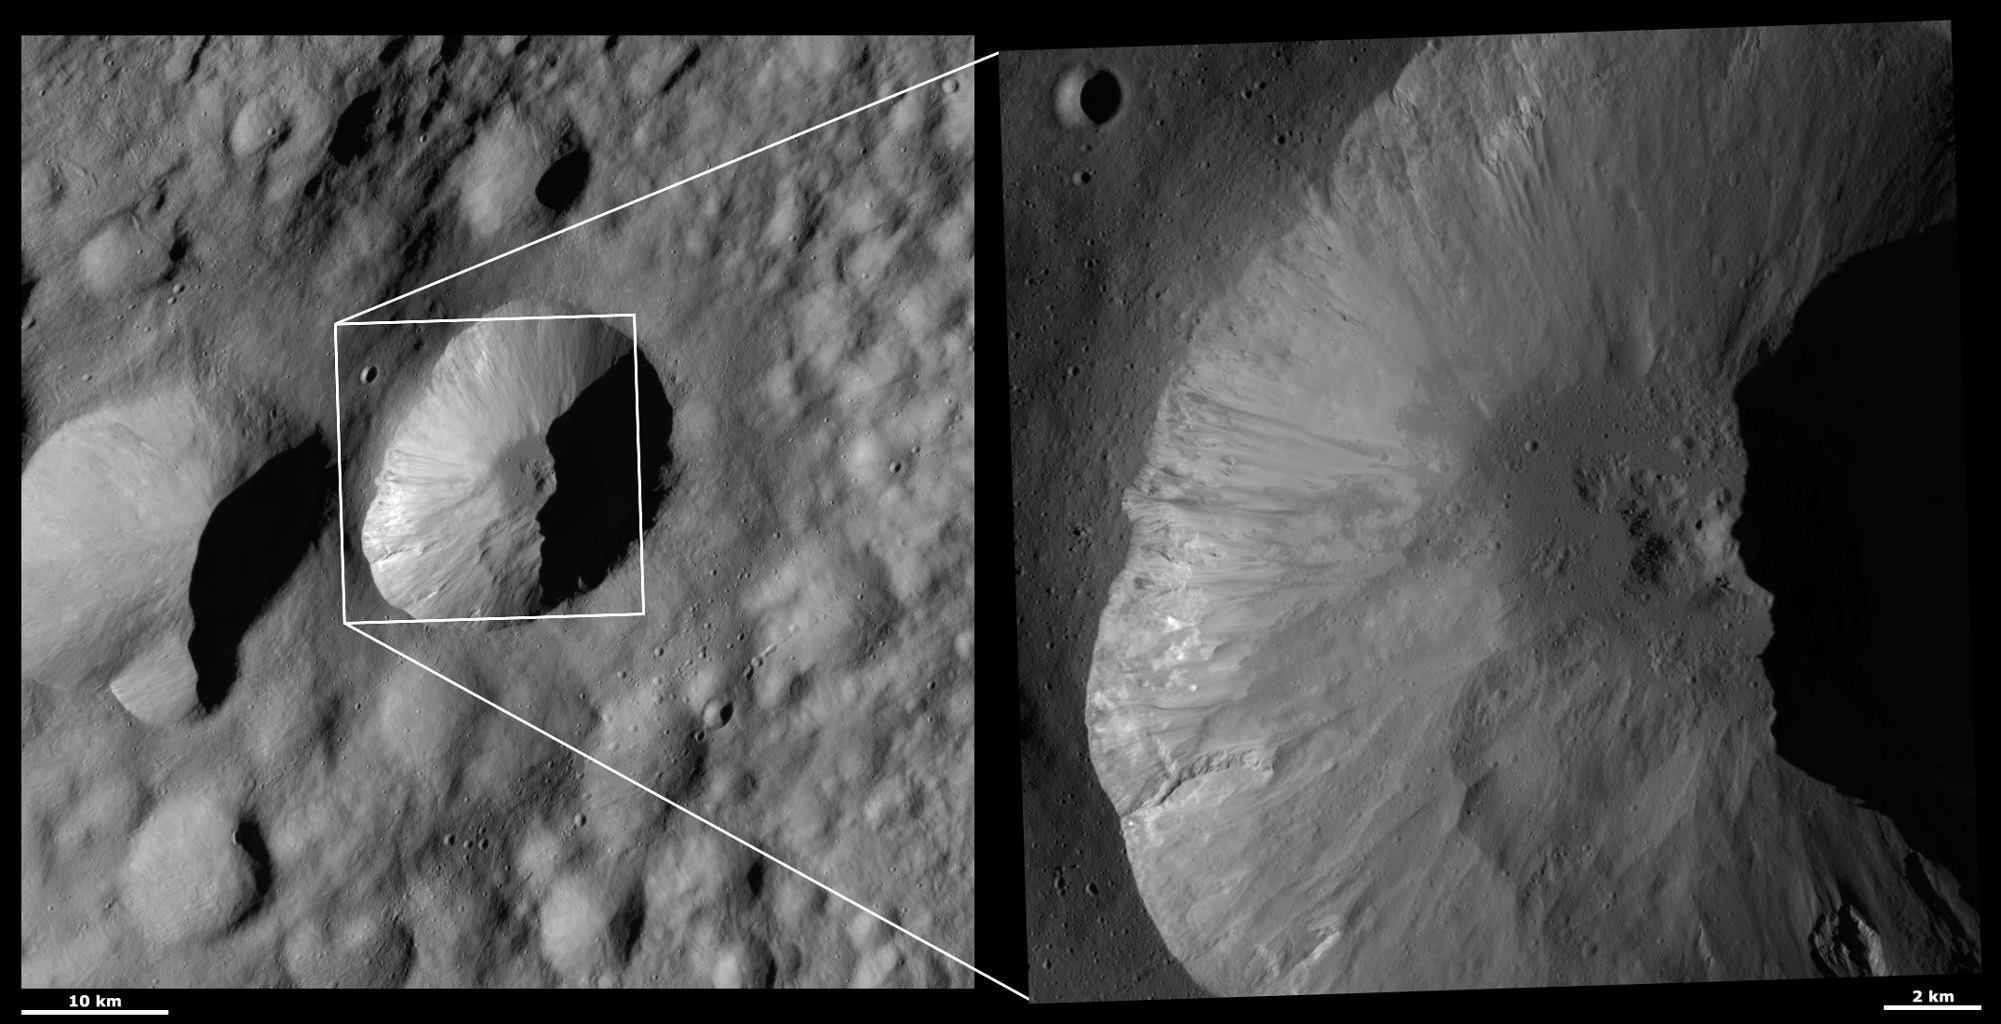 HAMO and LAMO Images of Licinia Crater